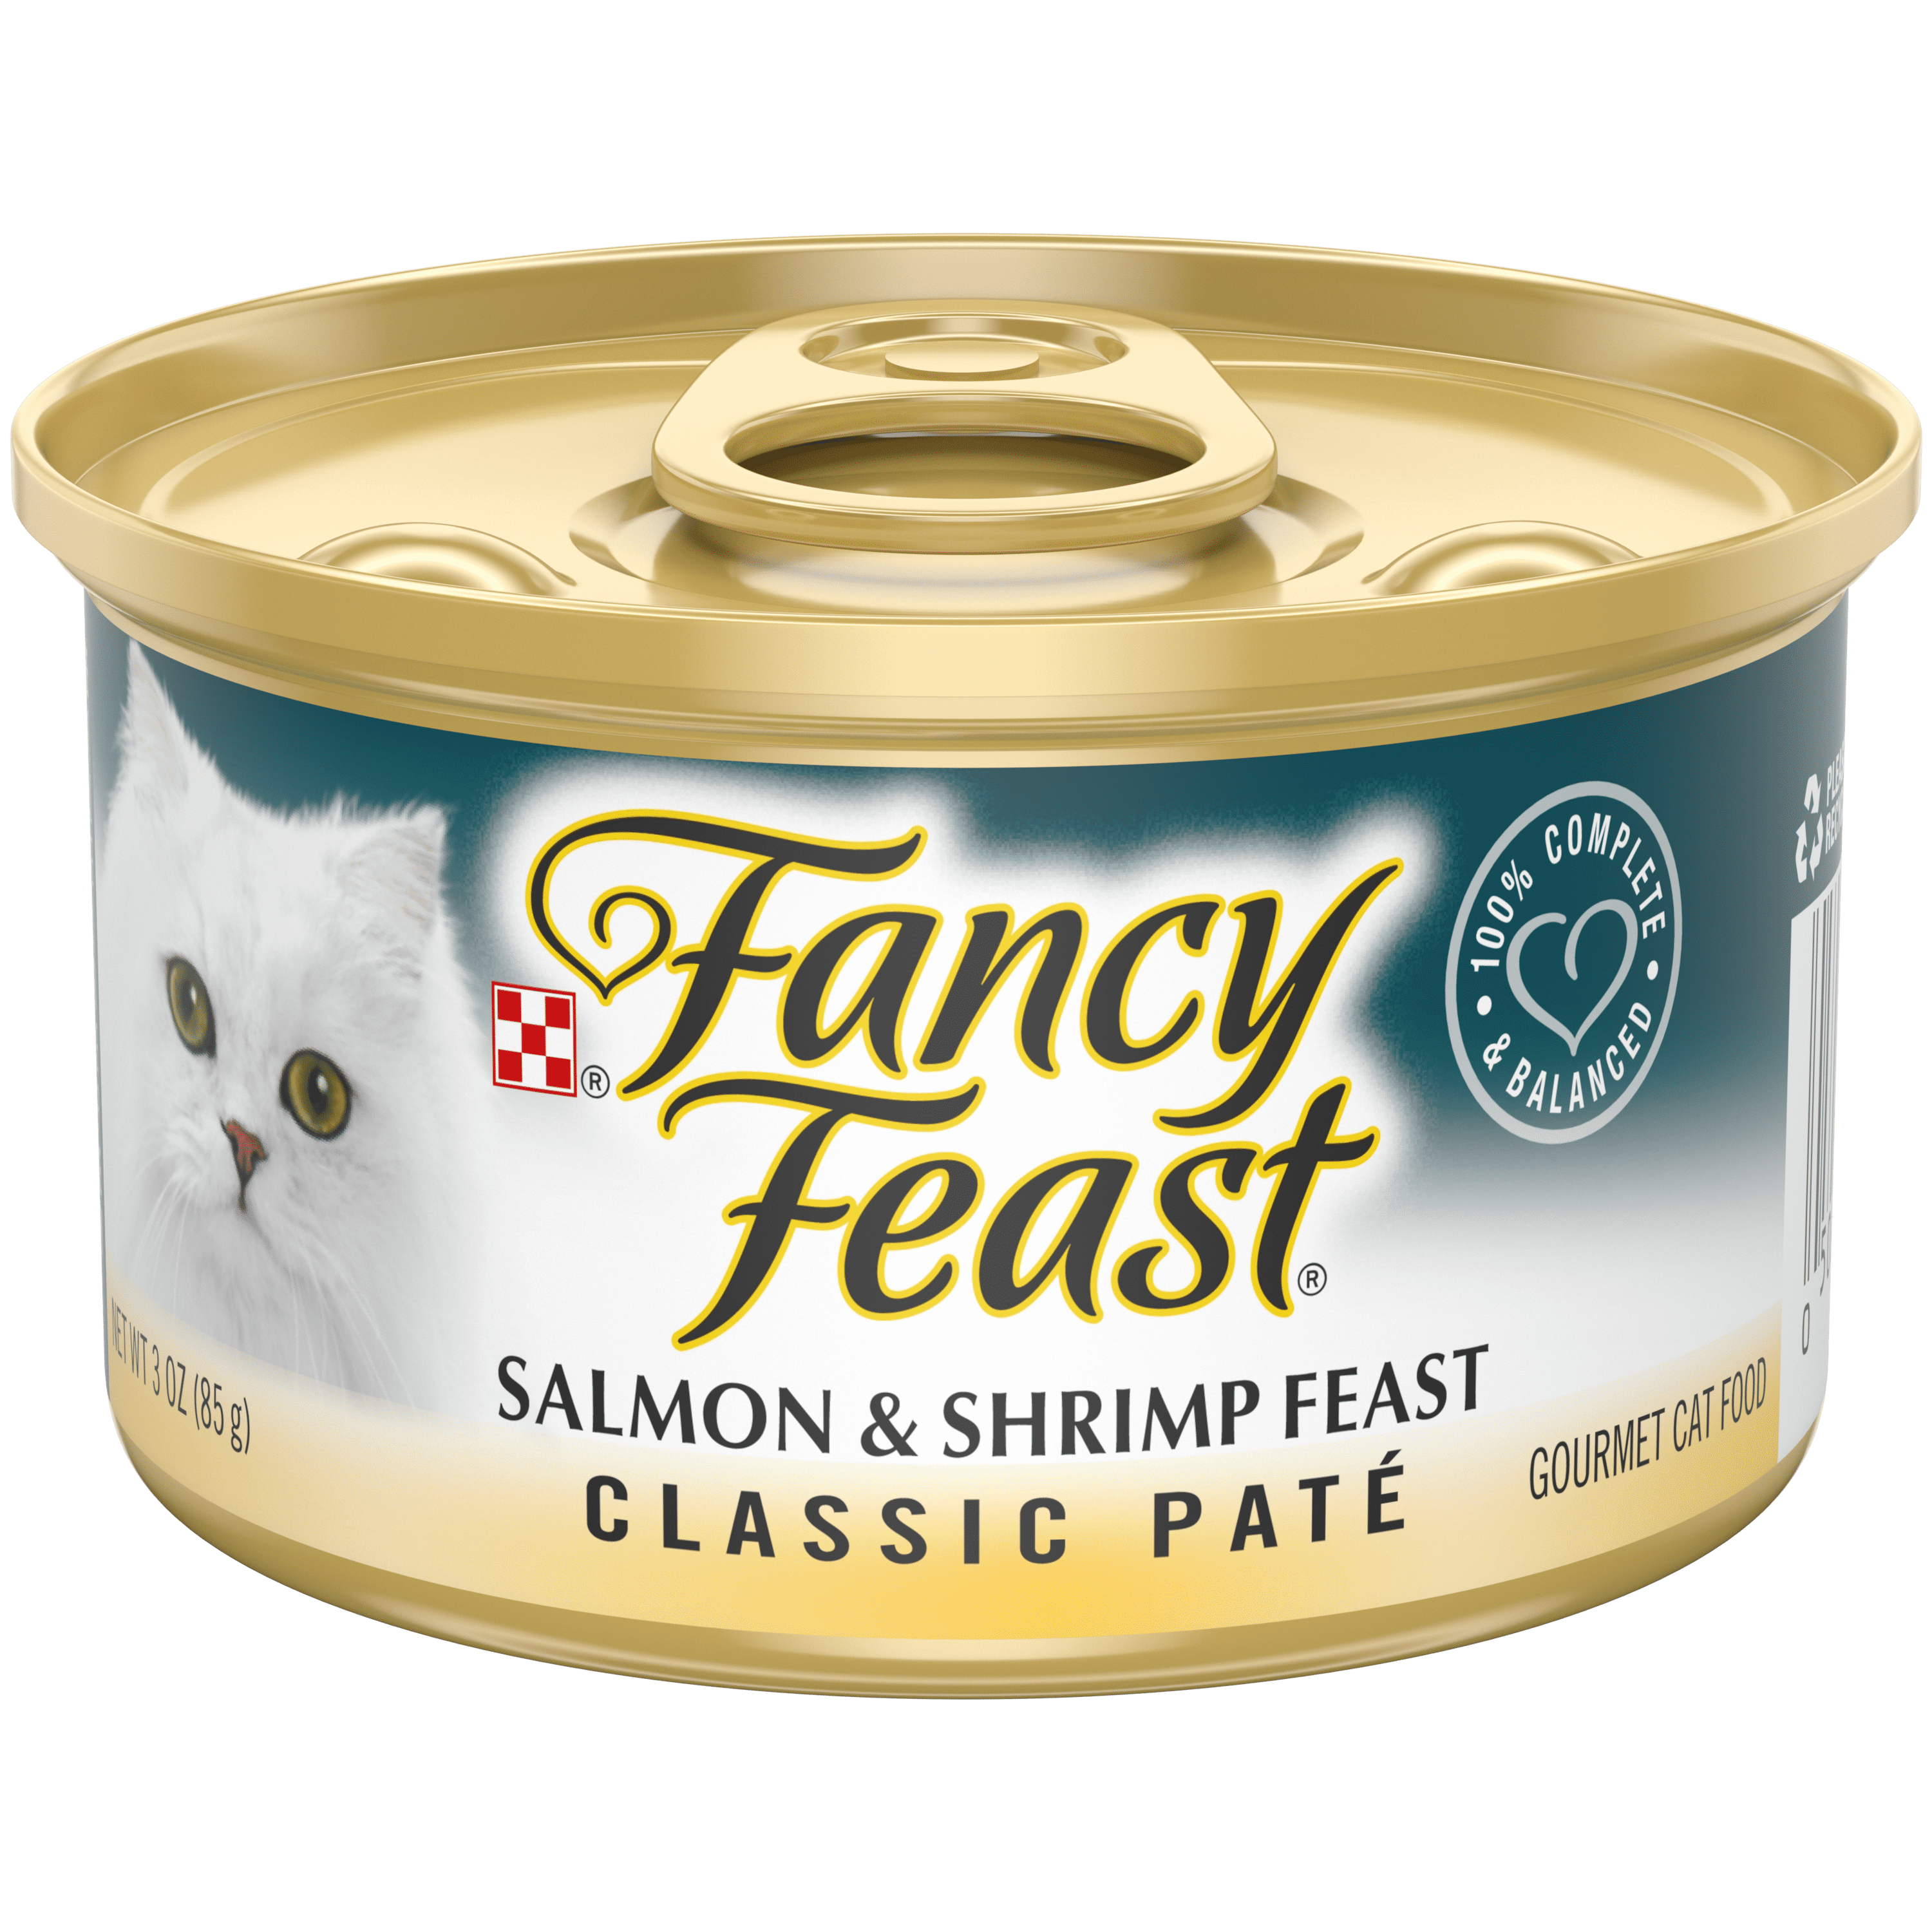 Fancy Feast Classic Pate Salmon & Shrimp Feast Canned Cat Food, 3 Oz